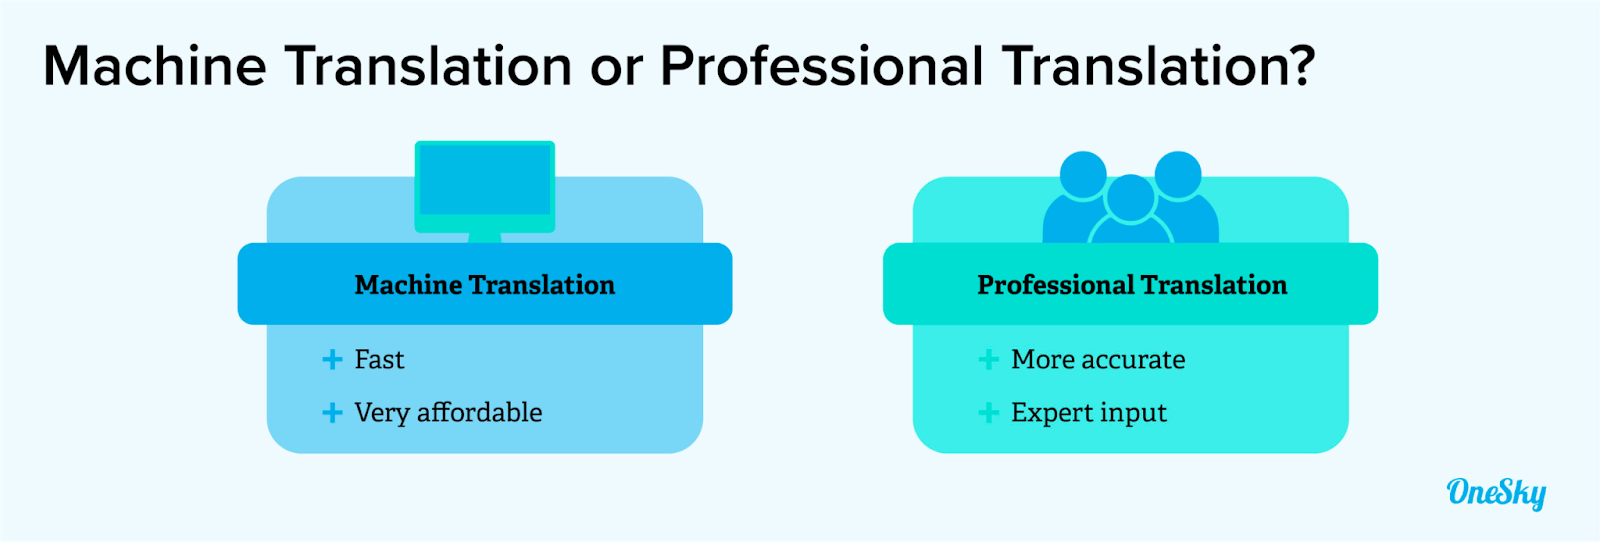 machine translation vs professional translation graphic